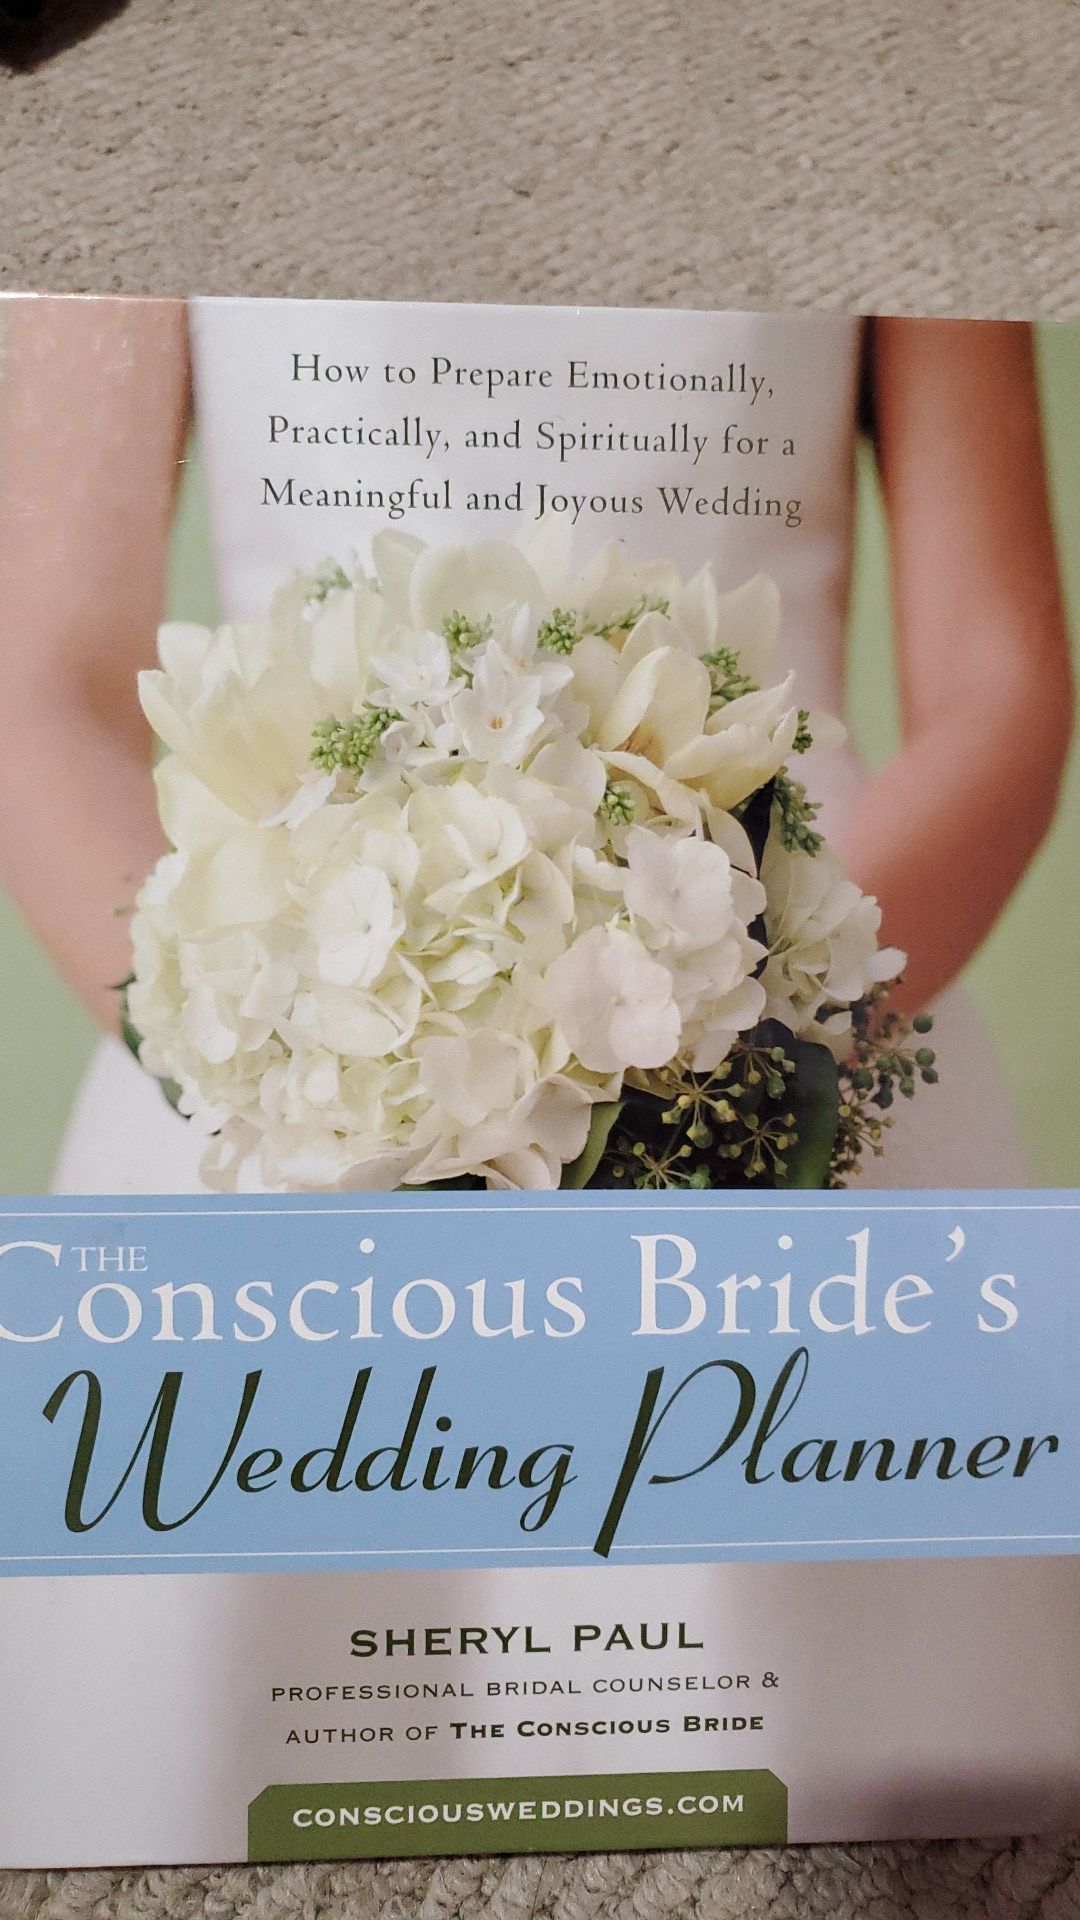 The Conscious Bride's Wedding Planner